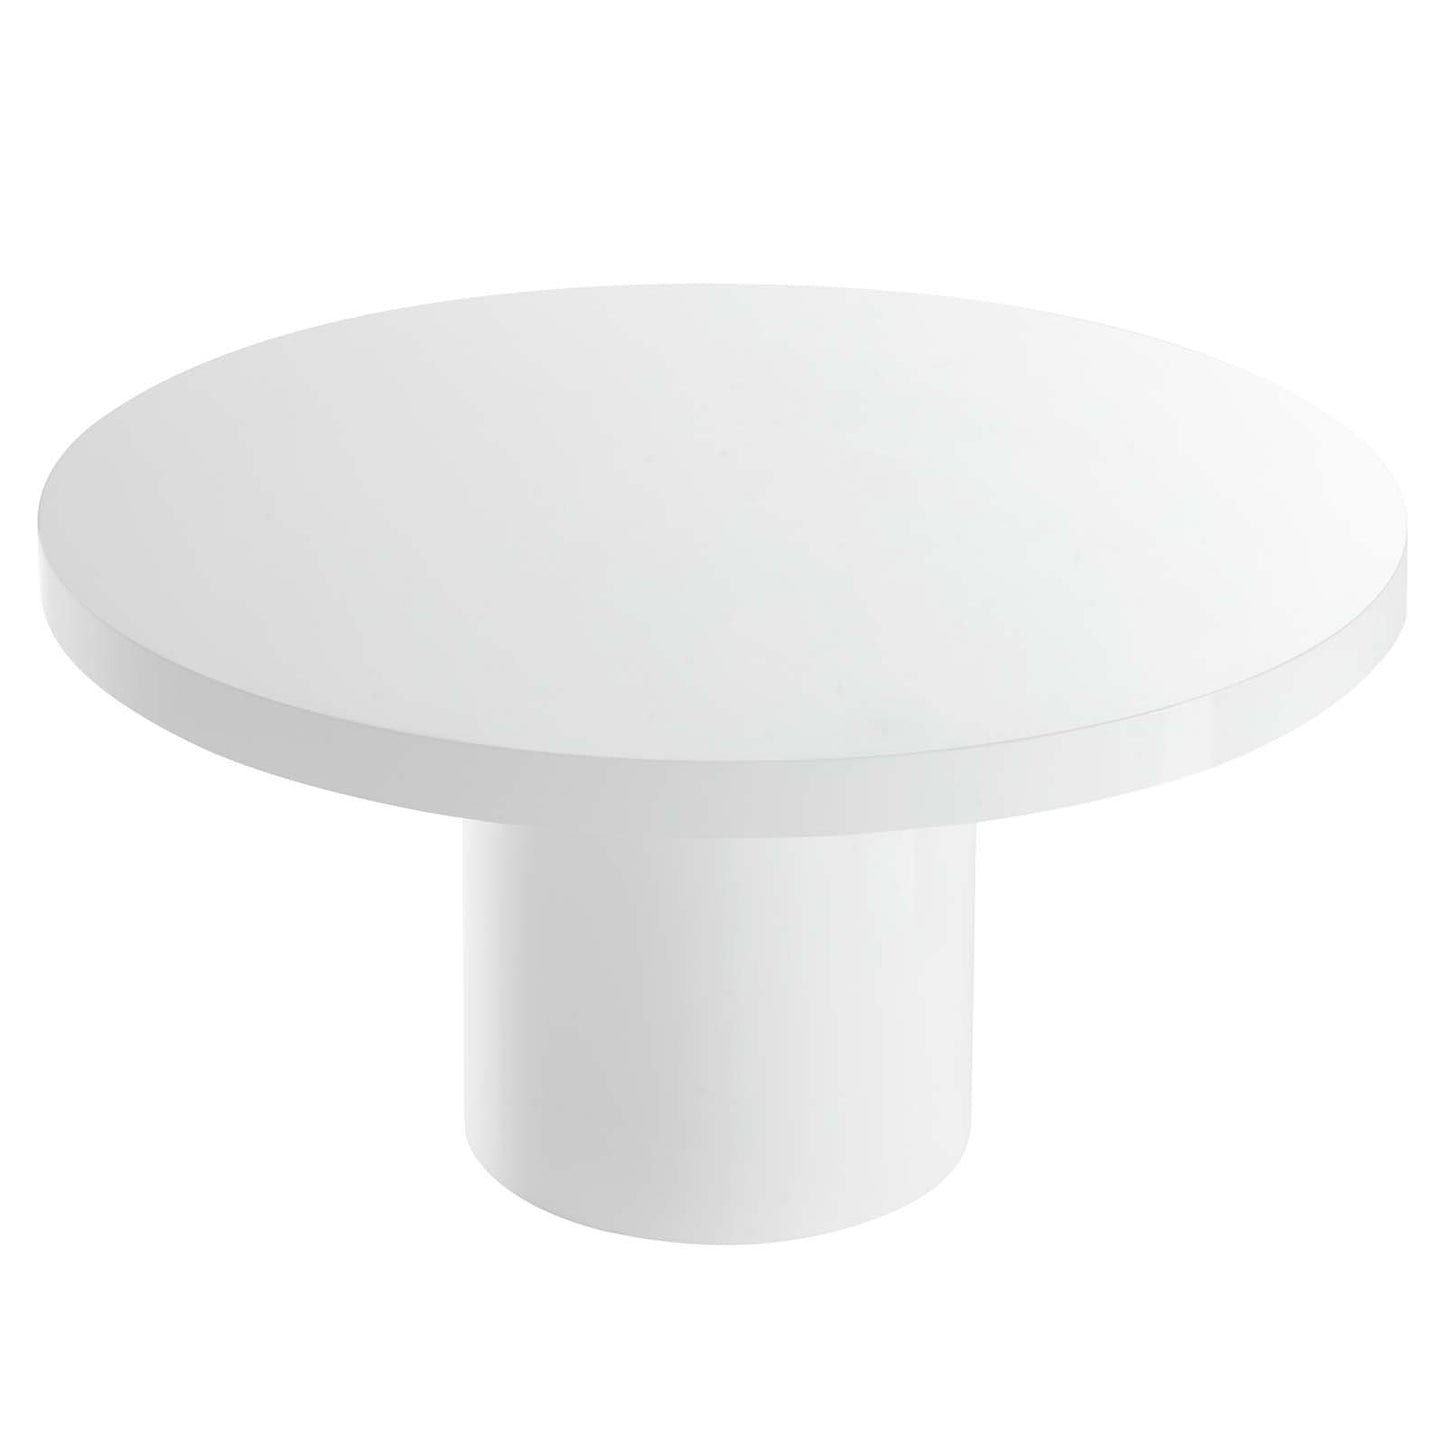 Gratify 60" Round Dining Table White EEI-4910-WHI